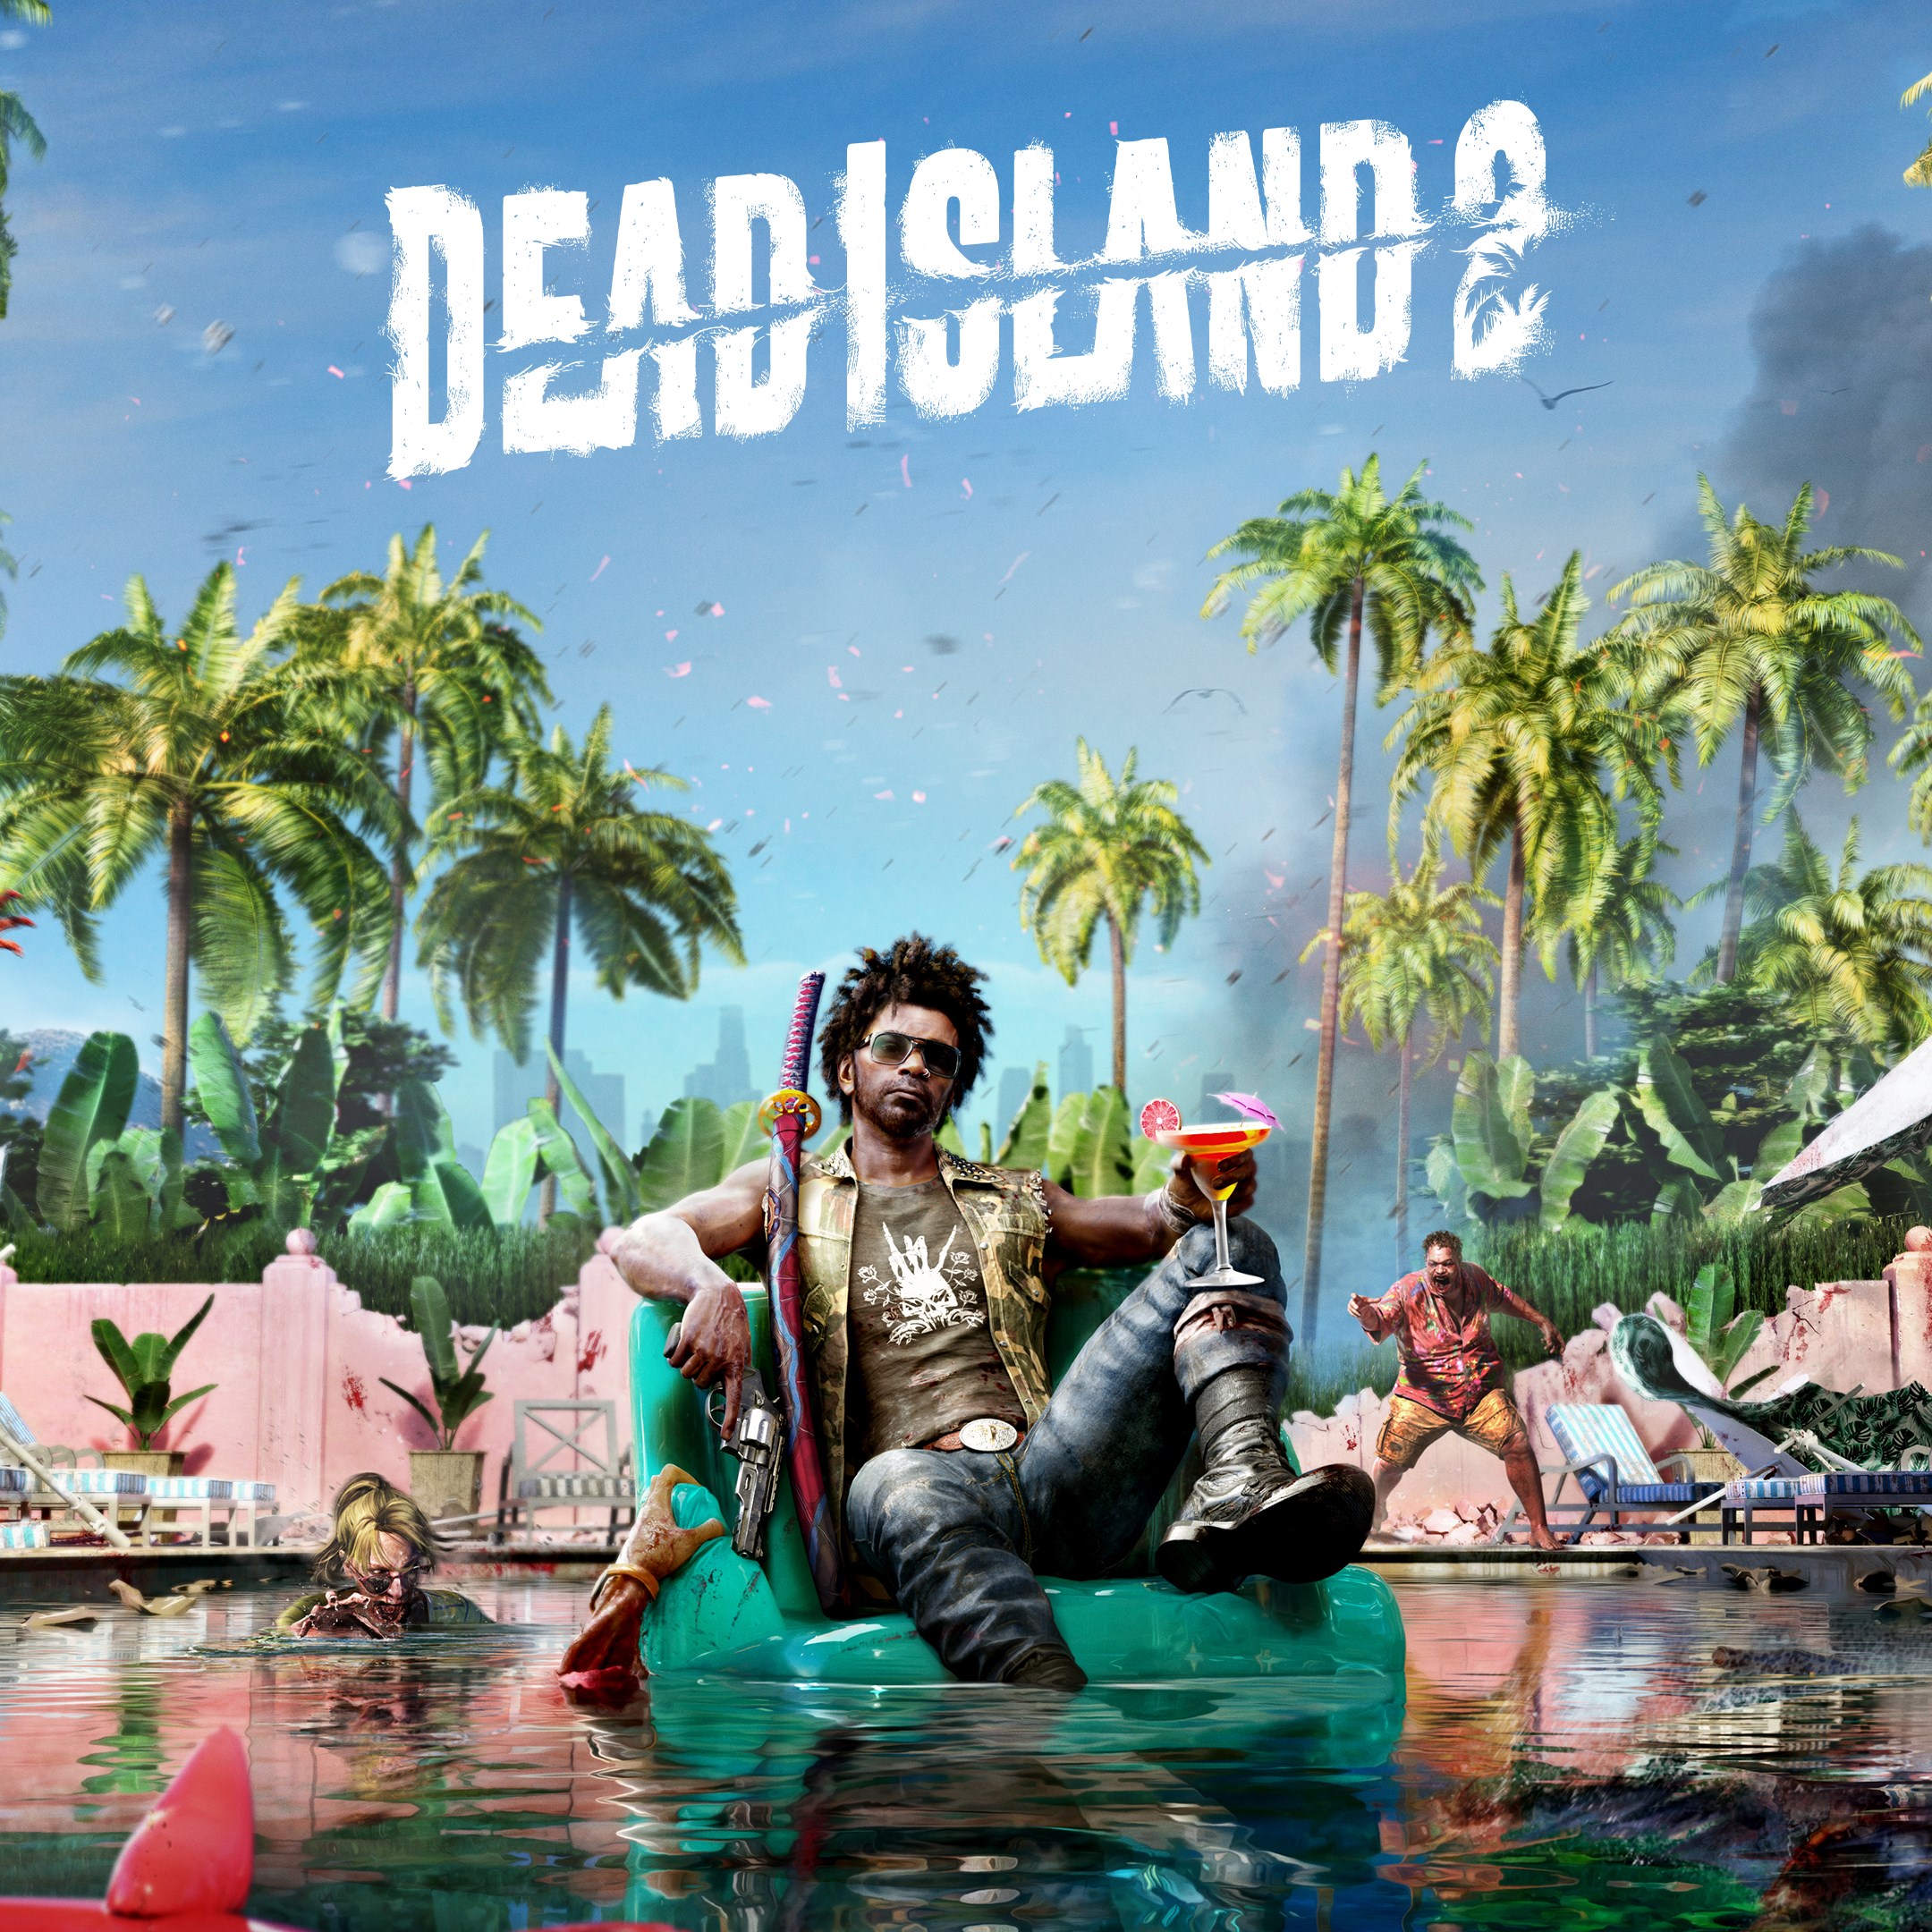 Dead island 4